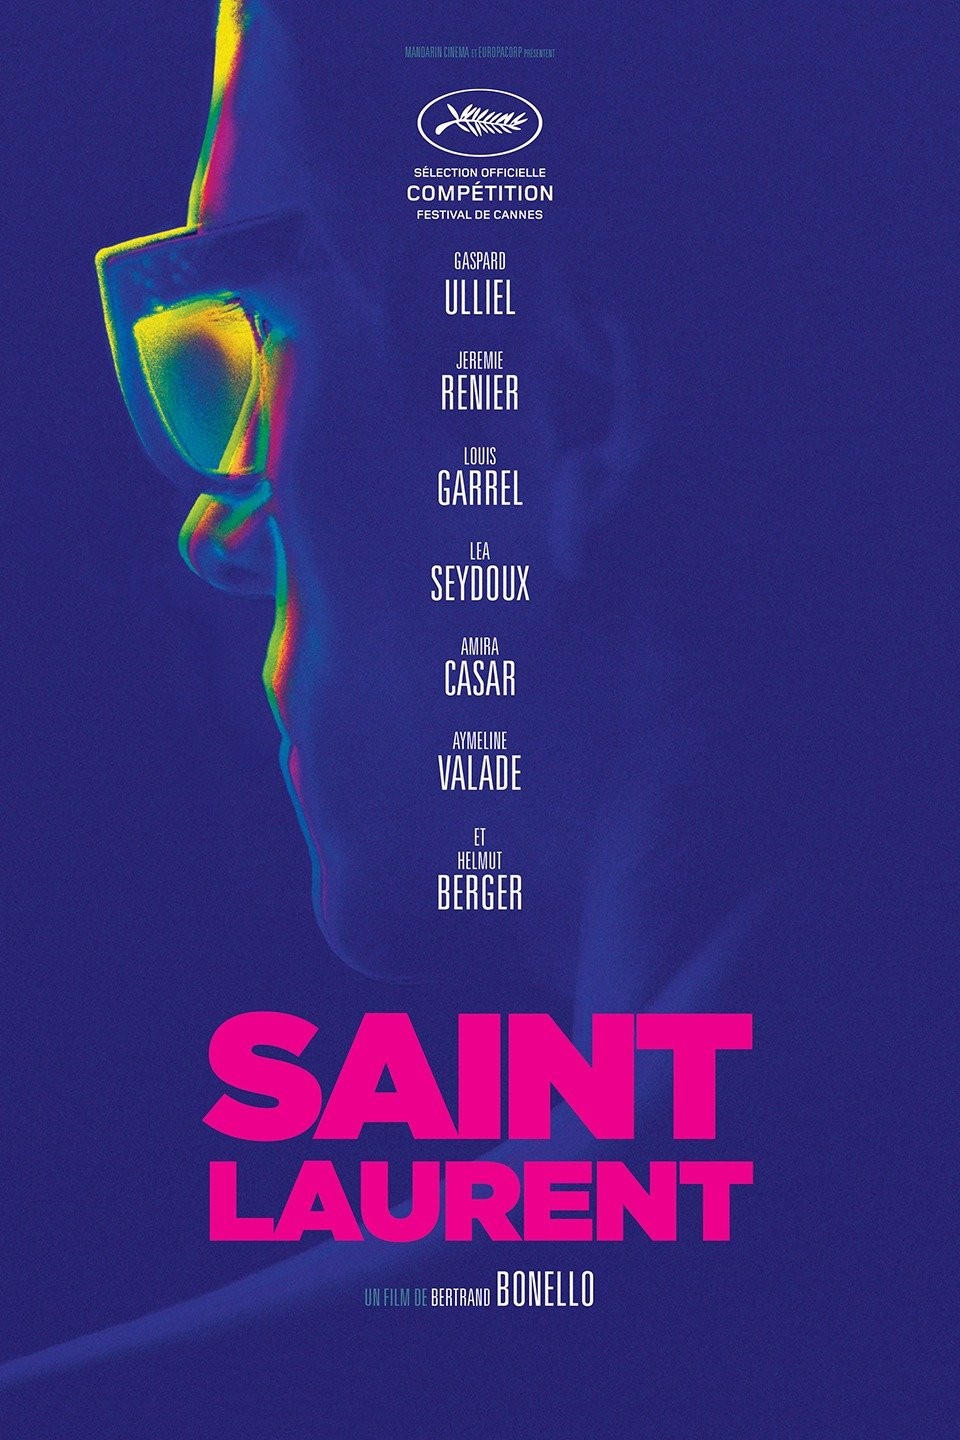 Yves Saint Laurent - Rotten Tomatoes